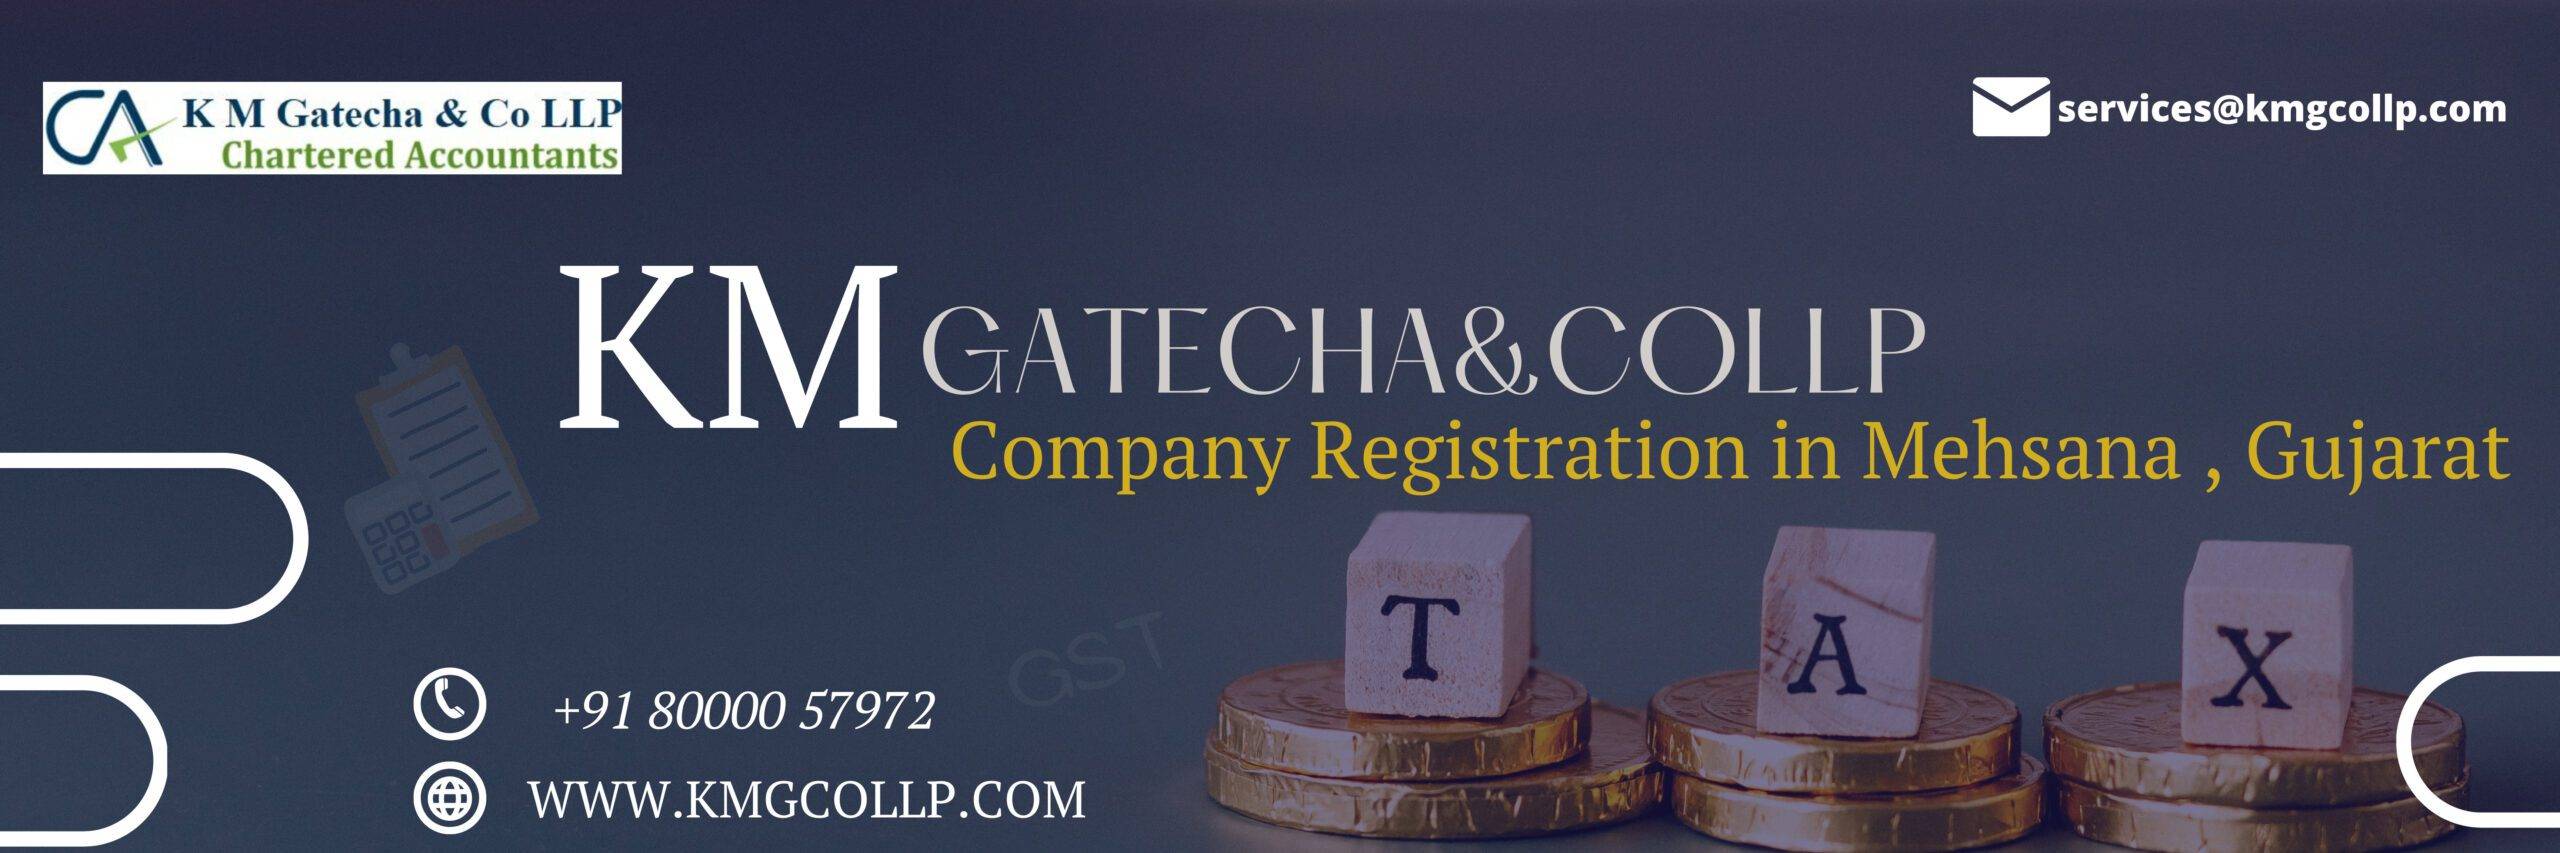 Company registration in Mehsana